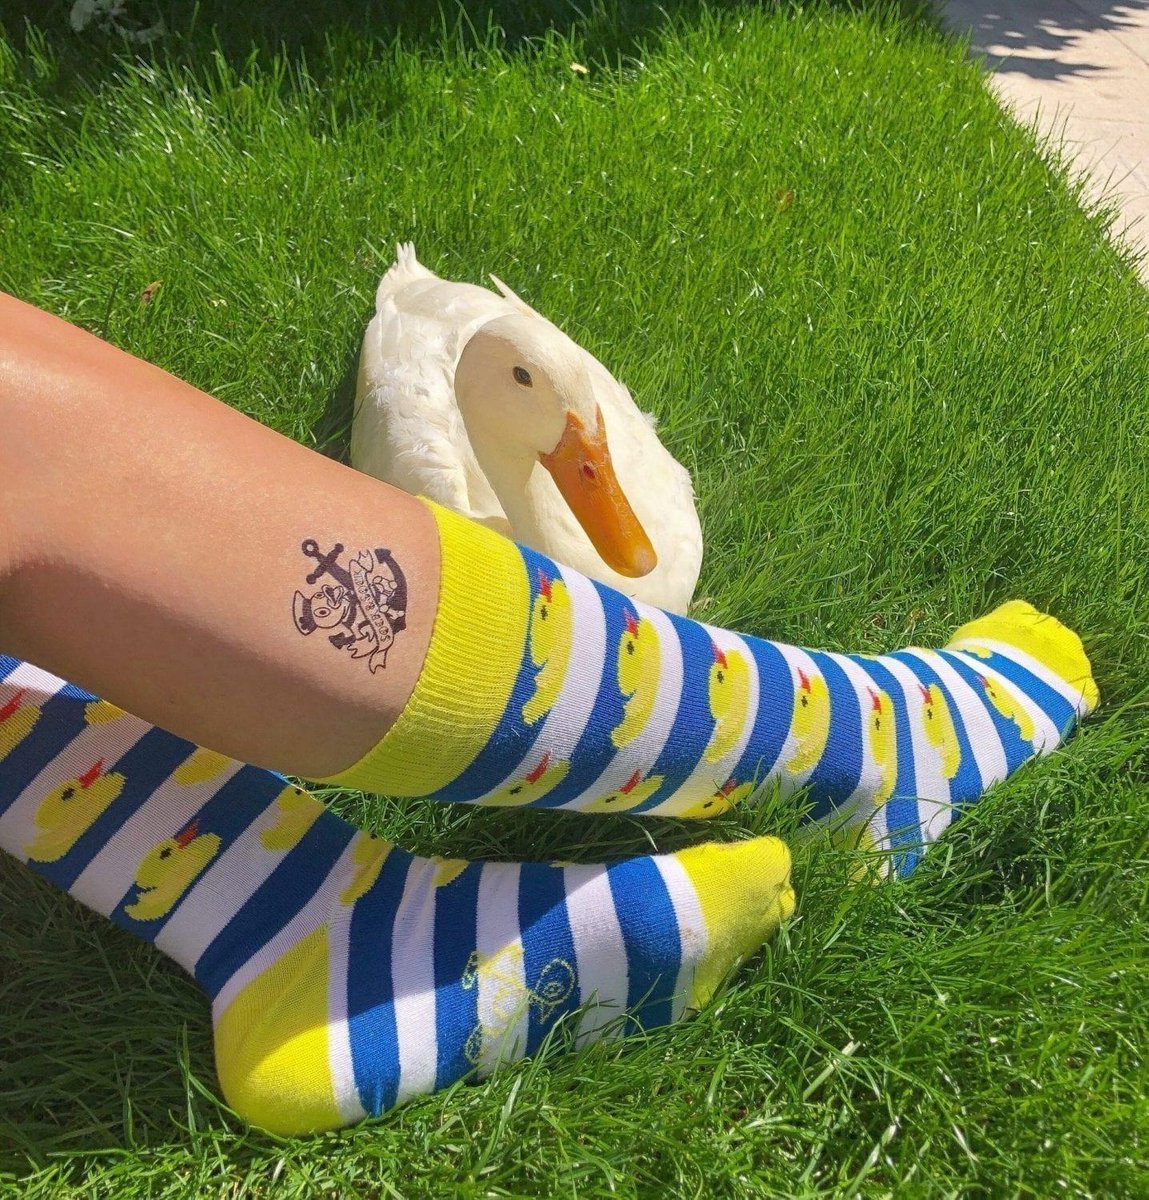 Sailor duck sok | Rubber ducky | Badeend sokken | Multi-color | Onesize fits all | Herensokken en damessokken | Leuke, grappig sokken | Funny socks that make you happy | Sock & Sock